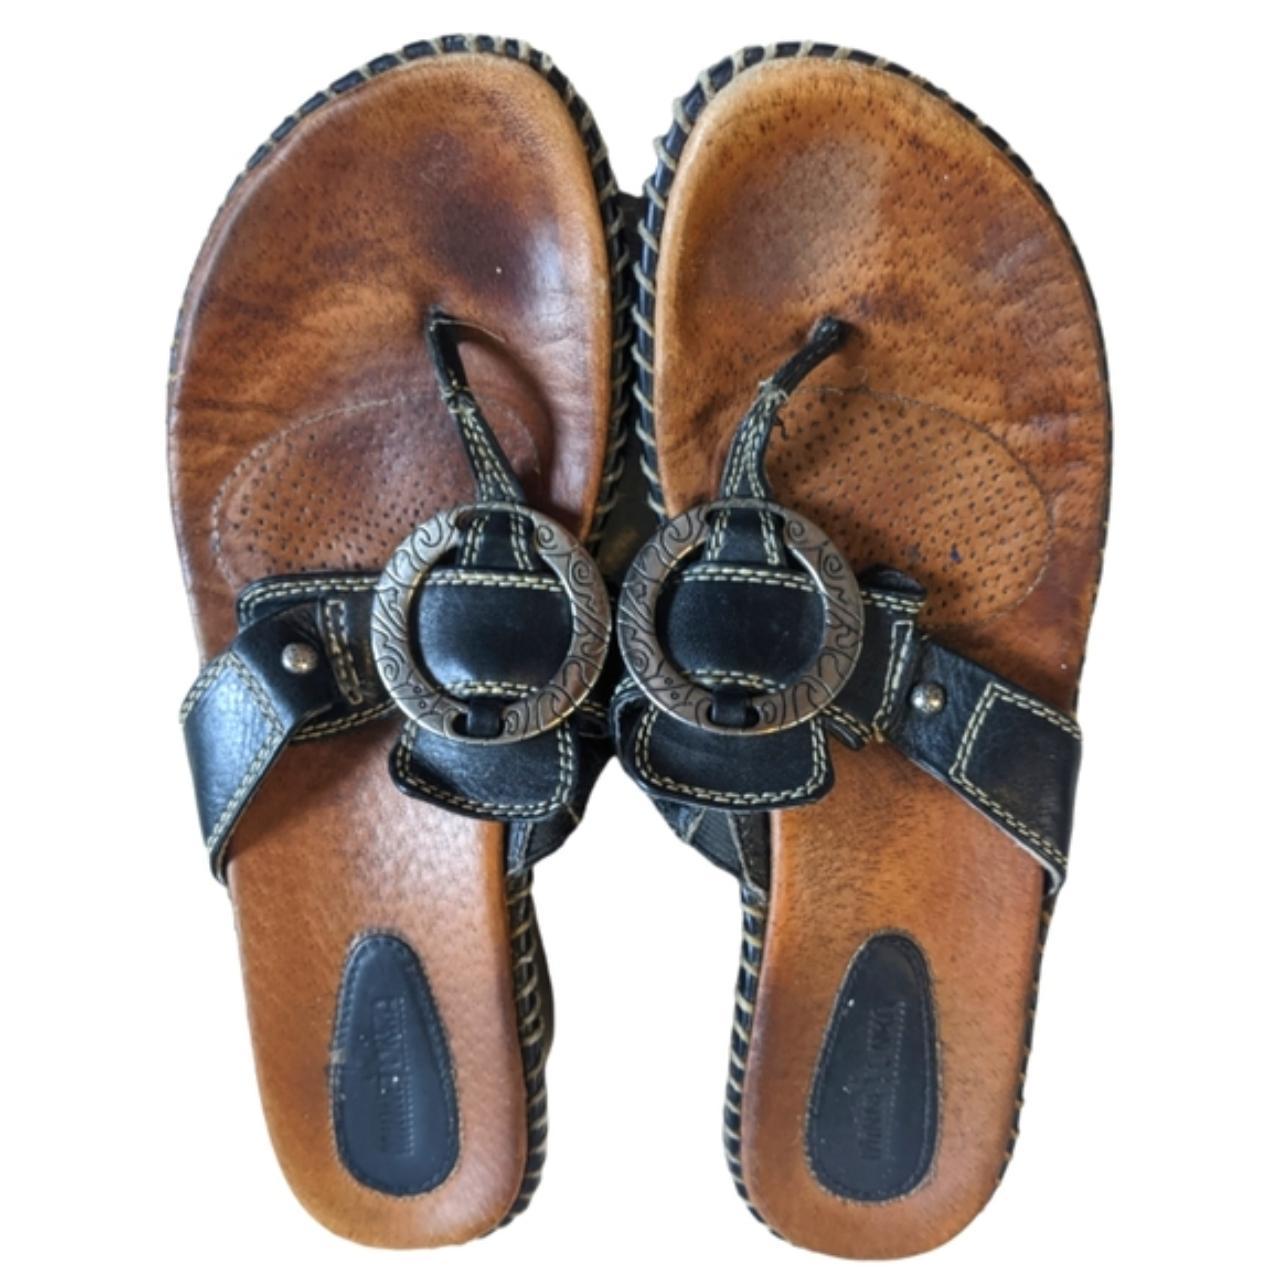 Product Image 1 - Minnetonka Boho Wedge Heel Sandal

Super